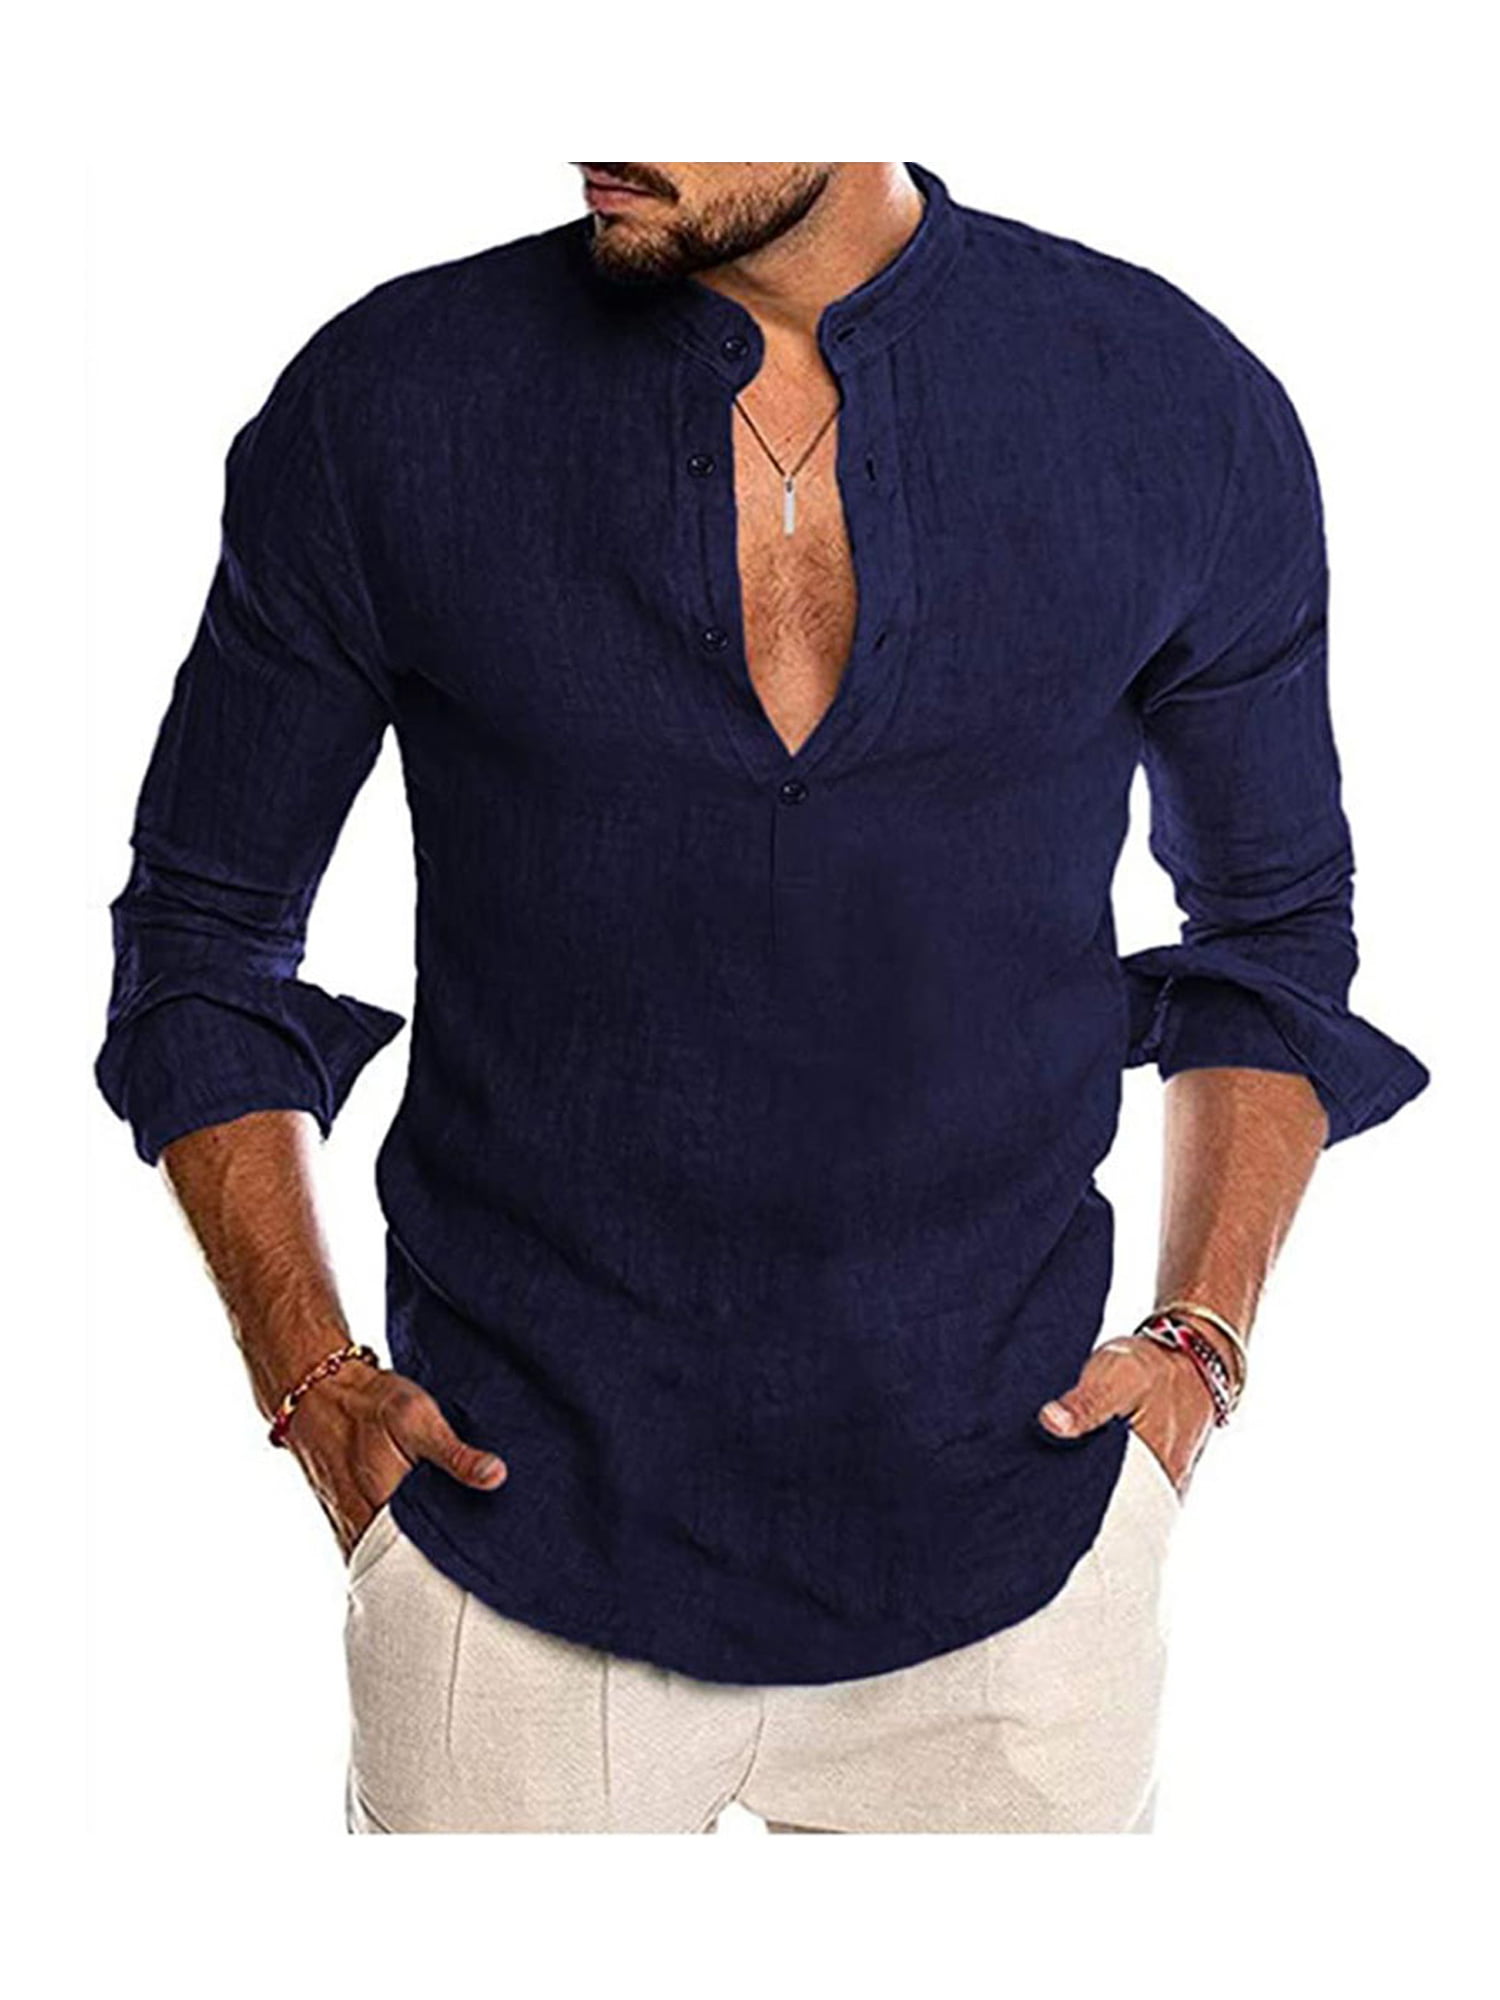 Mens Henley Grandad Collar Cotton T-Shirts Comfortable Long Sleeve Tee Shirts Tops S-XXL